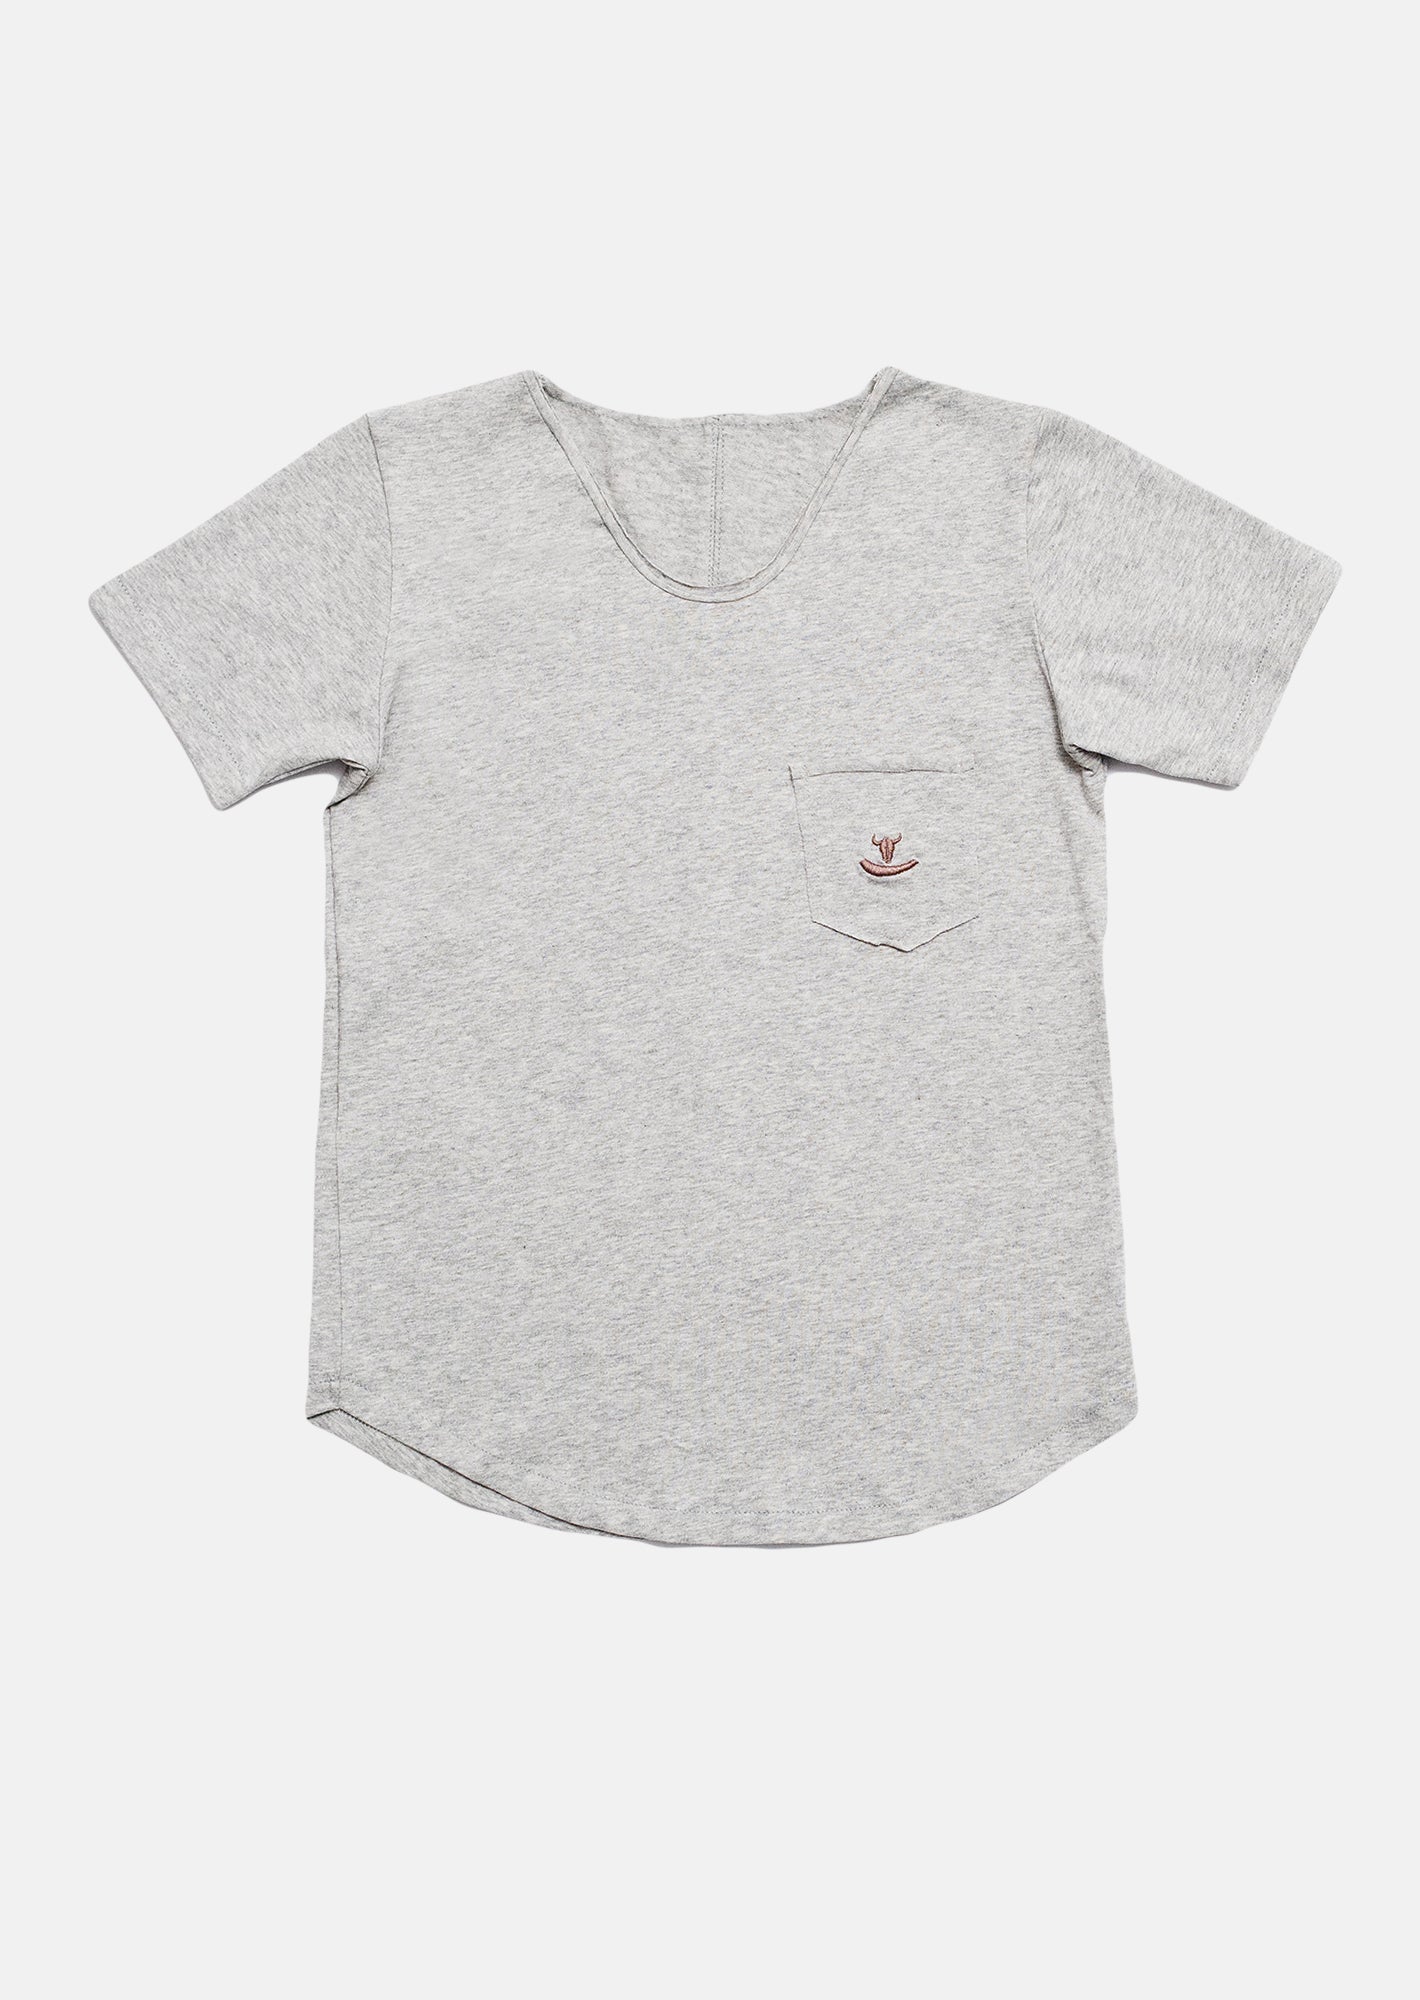 koszulka dziecięca - GRAY SIMPLE TEE  gray